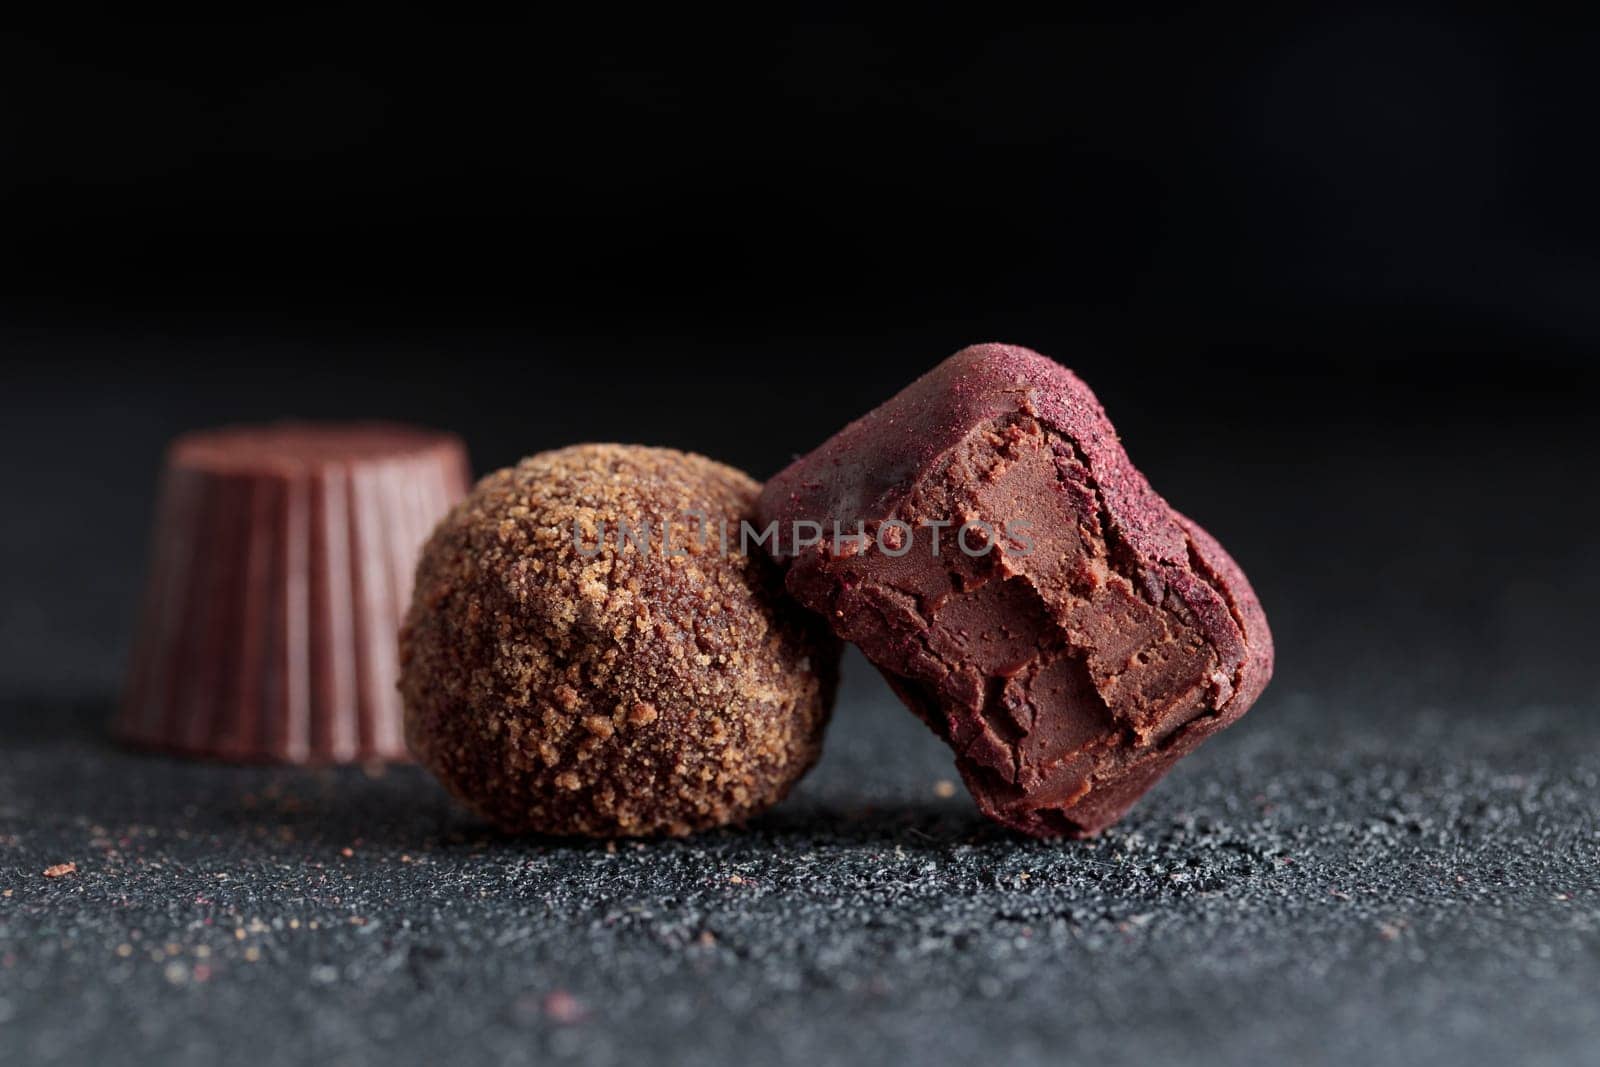 Premium gourmet chocolate handmade truffles from confectionery, homemade dark chocolate candies on black background